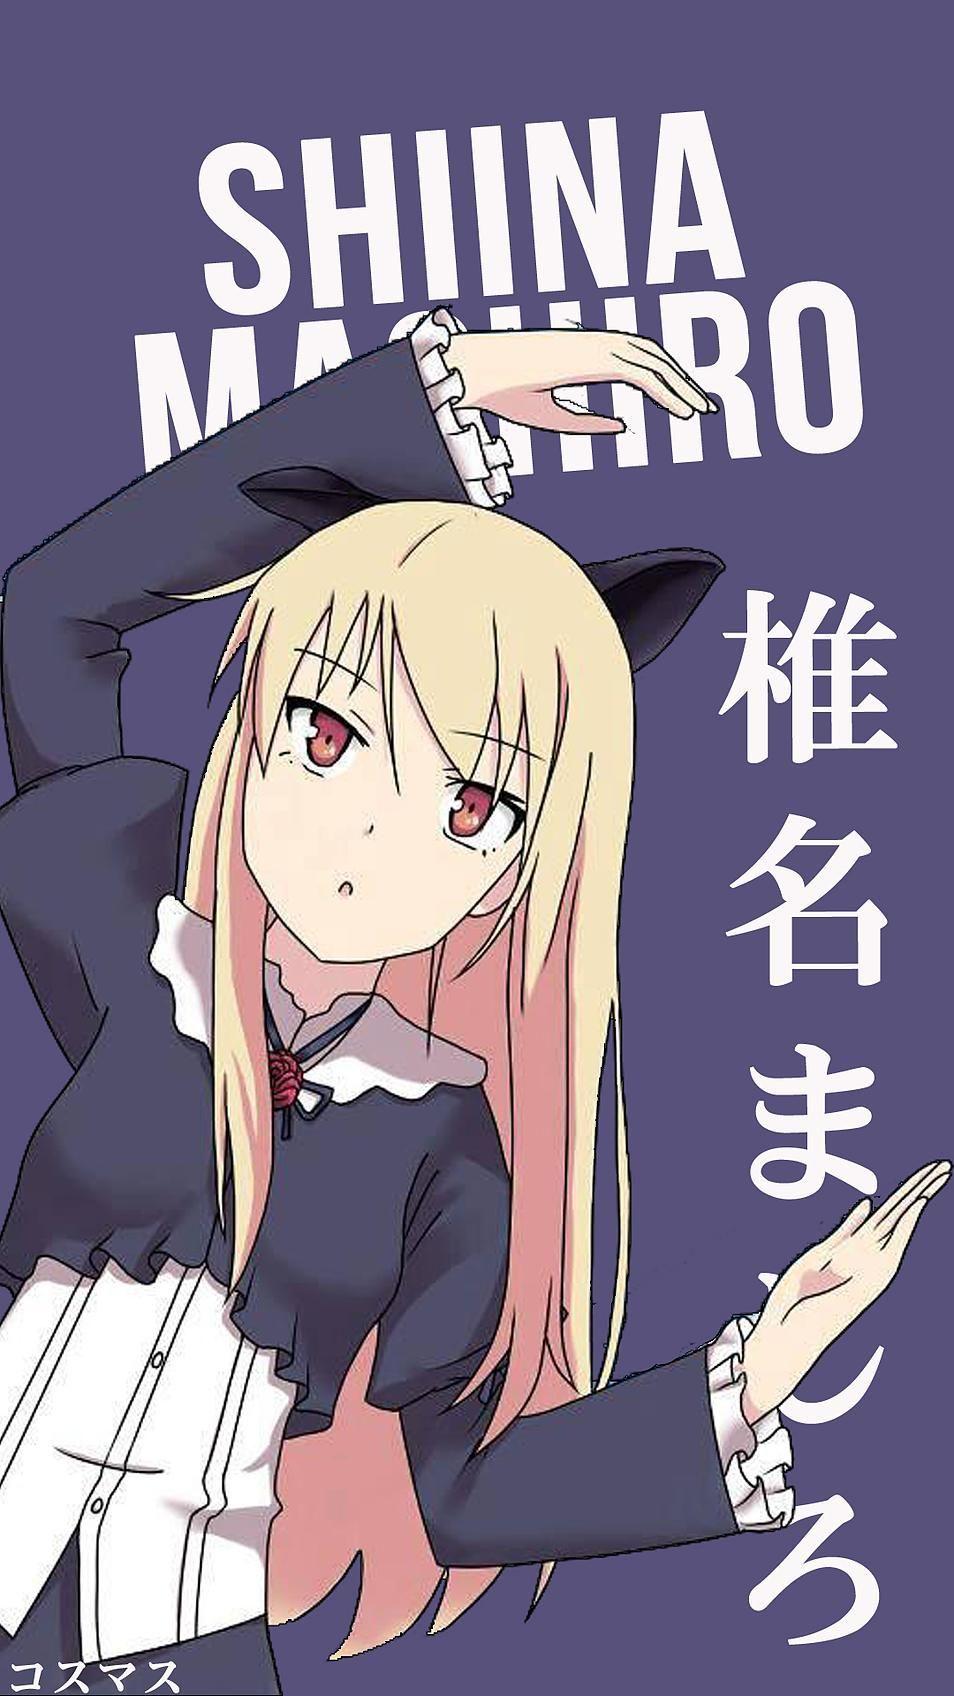 Shiina Mashiro V4 Korigengi. Wallpaper Anime. Korigengi